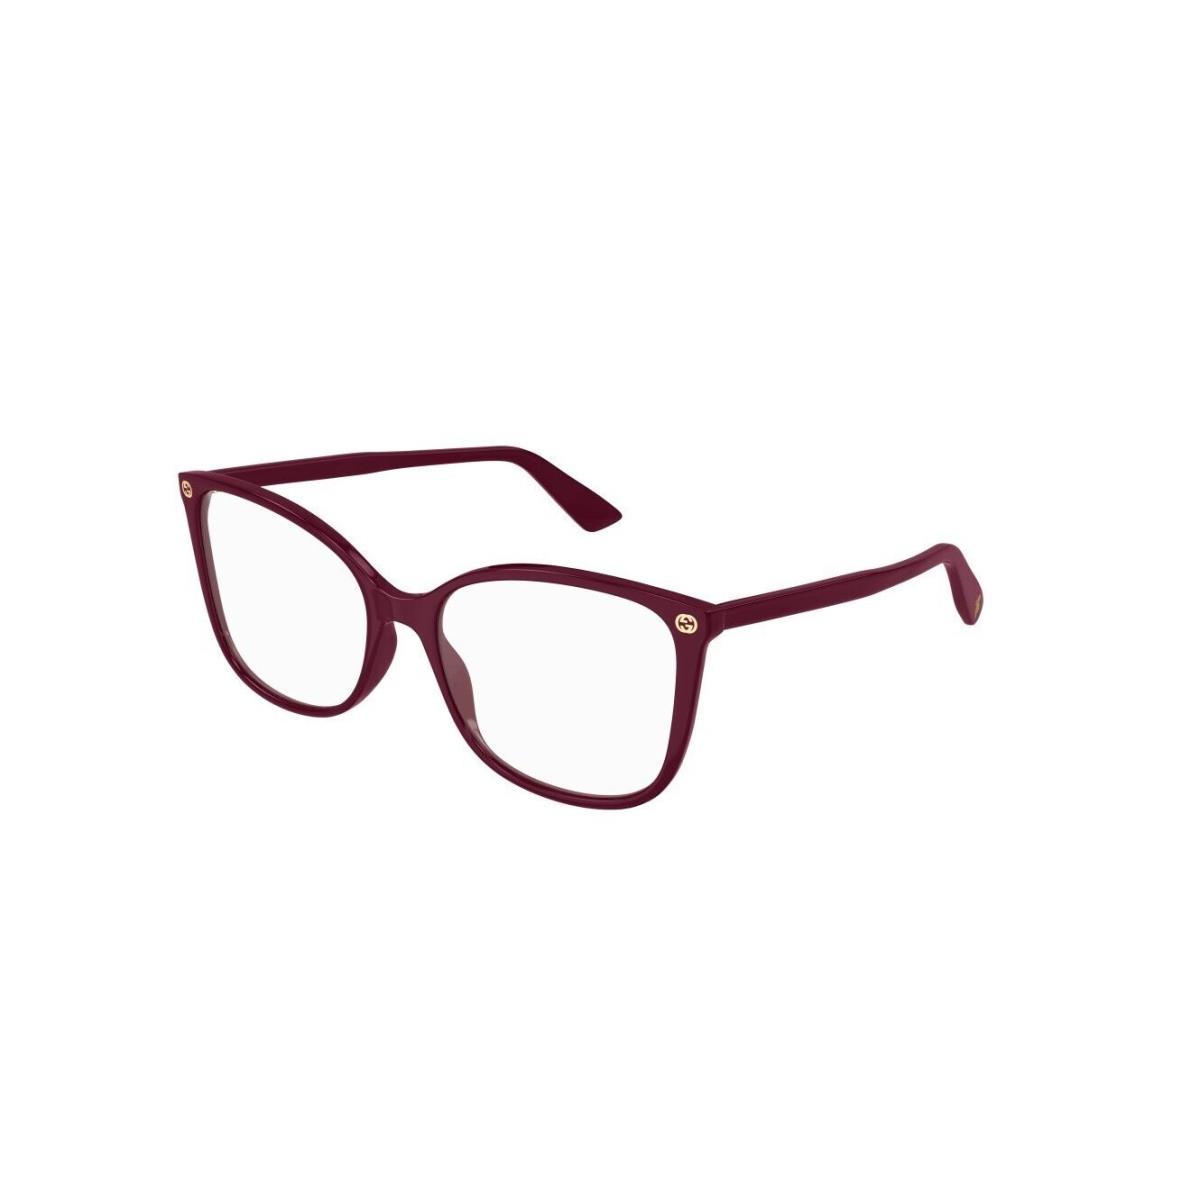 Gucci GG0026O 012 Burgundy Soft Square Women`s Eyeglasses - Frame: Burgundy, Lens: